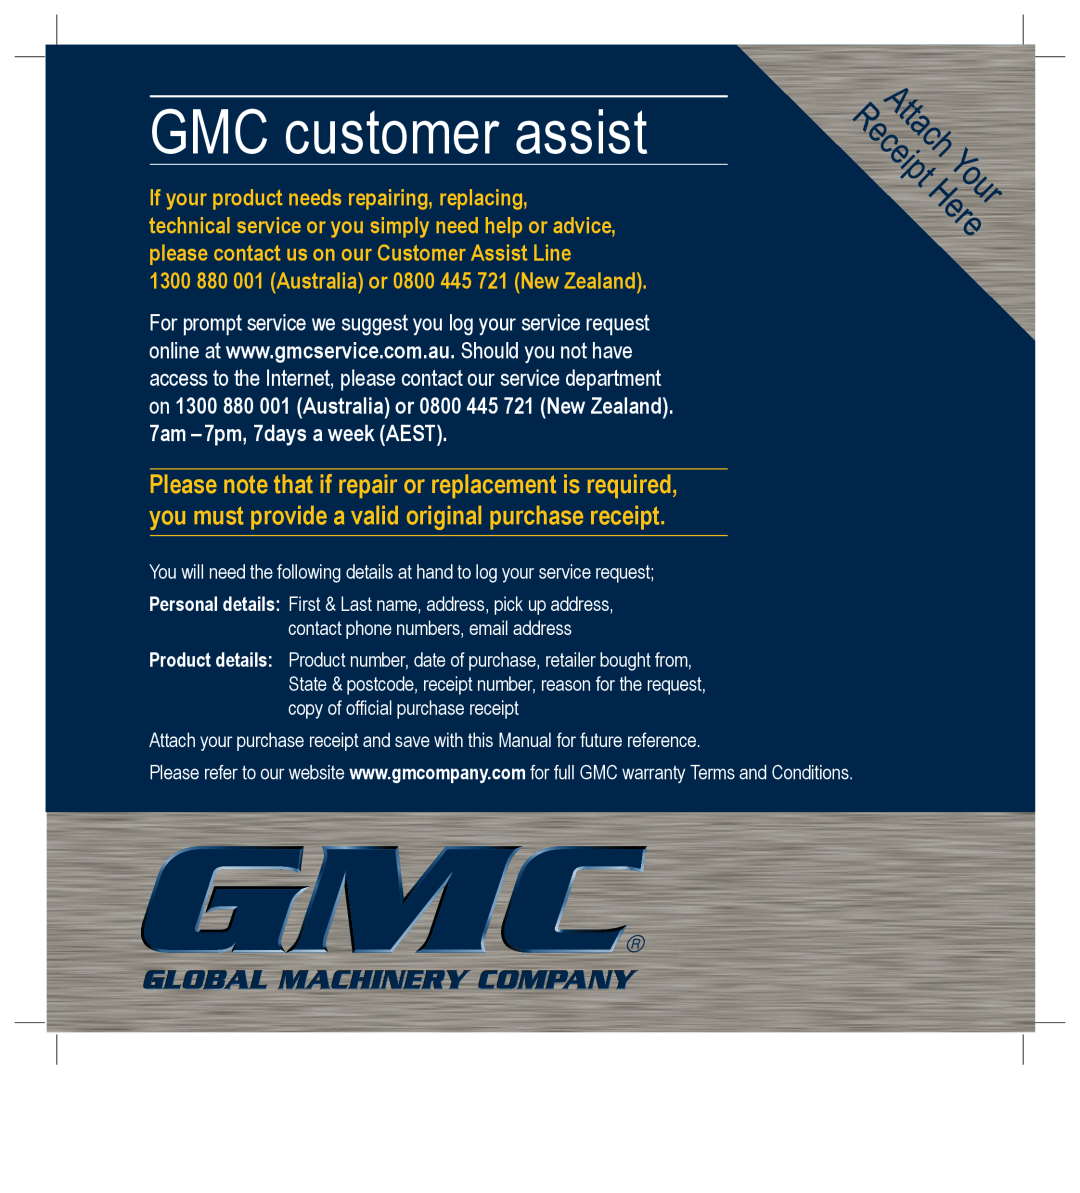 Global Machinery Company GEN1000 instruction manual GMC customer assist, 1300 880 001 Australia or 0800 445 721 New Zealand 